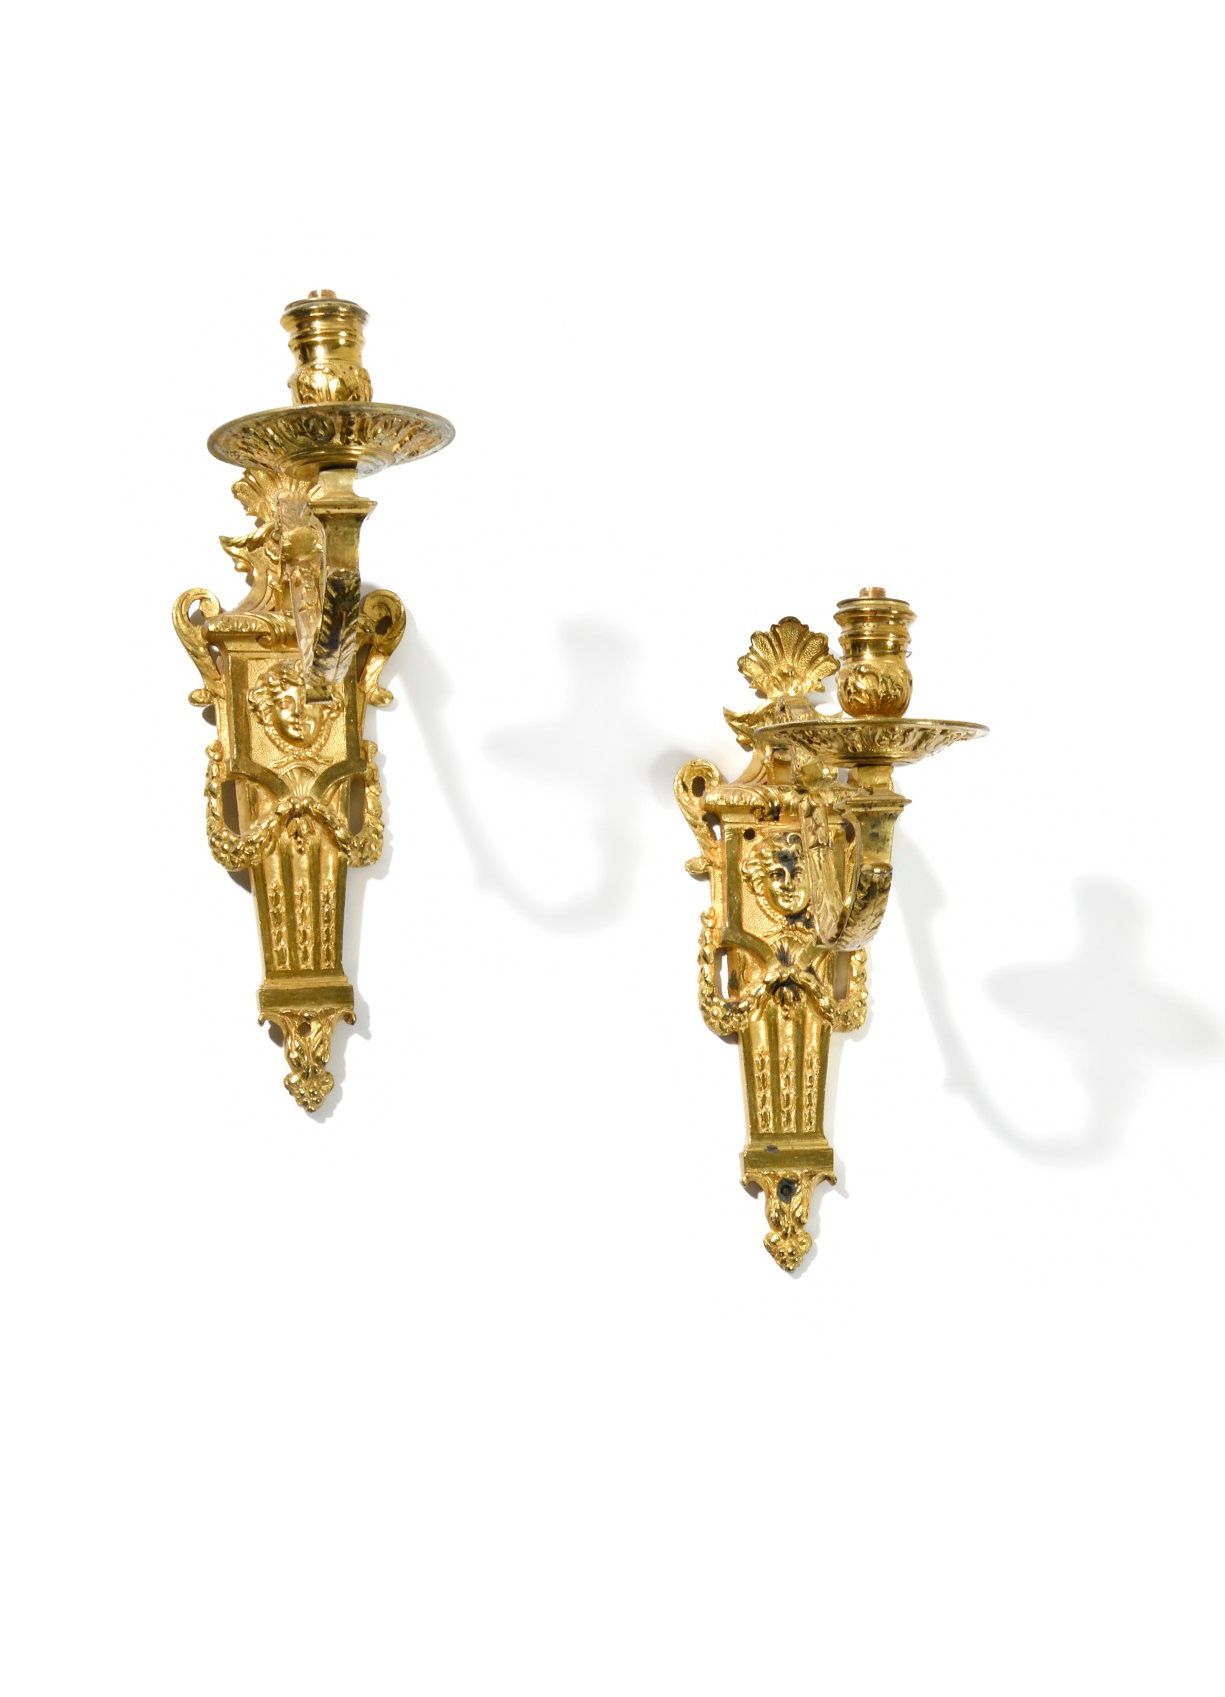 Null 一对单灯烛台 
鎏金青铜雕刻，饰有贝壳、马斯卡龙和叶子花环。
路易十四晚期至摄政时期。 
高度：26.5 厘米
(修复、铜锈磨损、电孔）